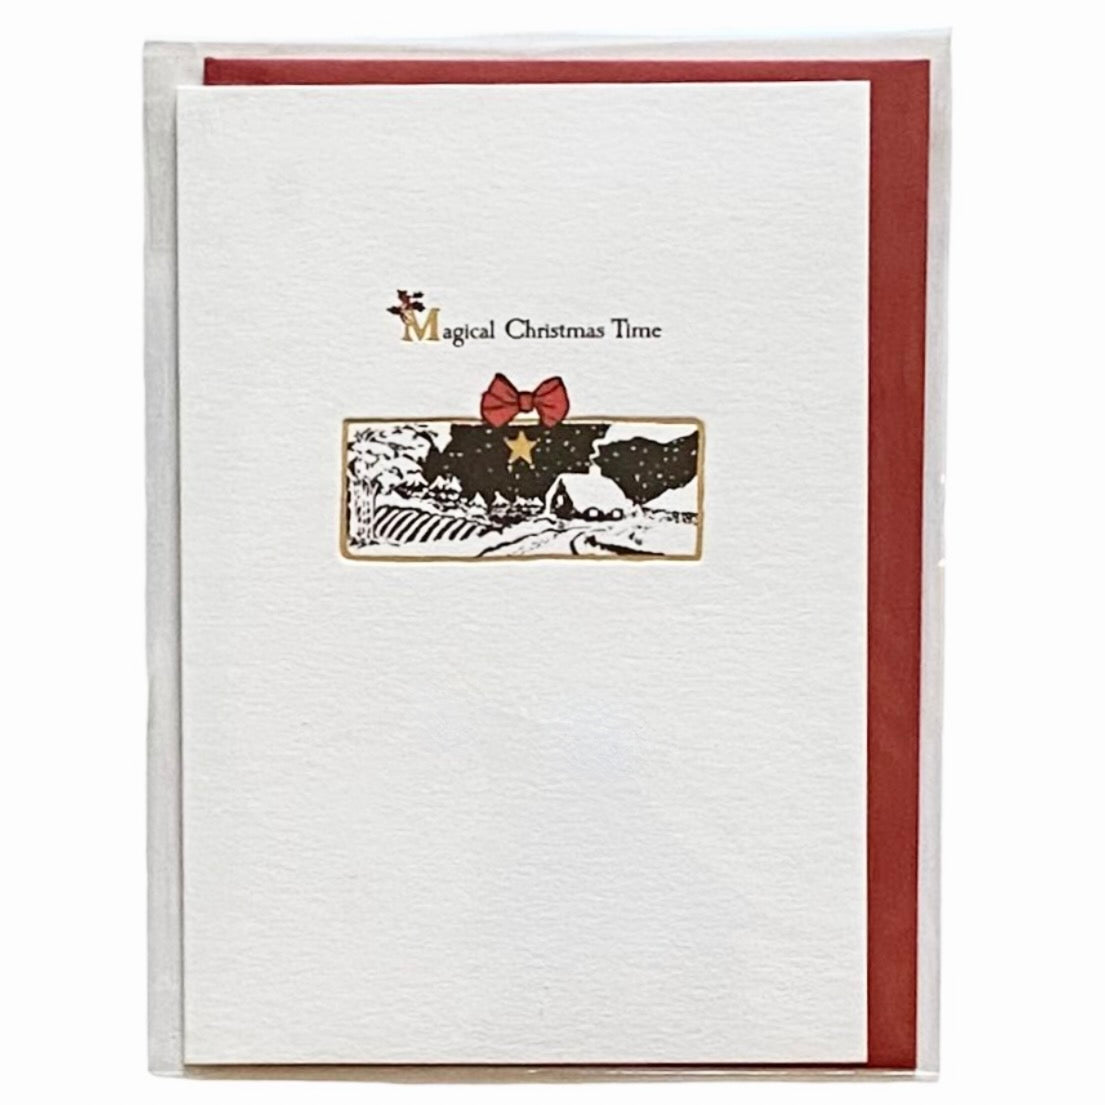 The Art File "Magical Christmas Time" Greeting Card | Putti Christmas 